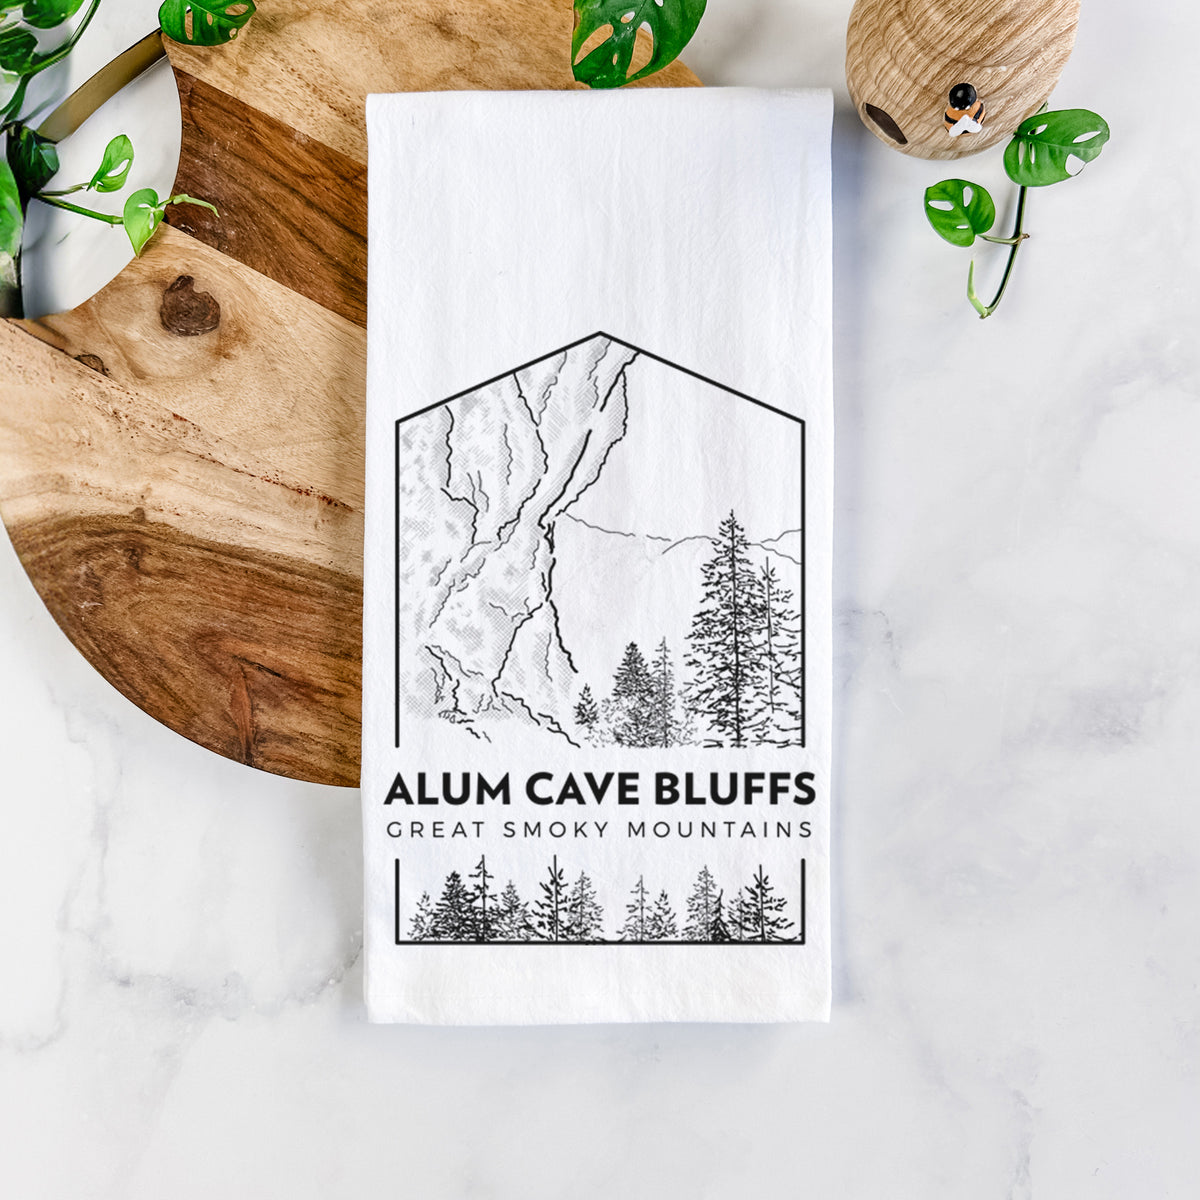 Alum Cave Bluffs - Great Smoky Mountains National Park Tea Towel